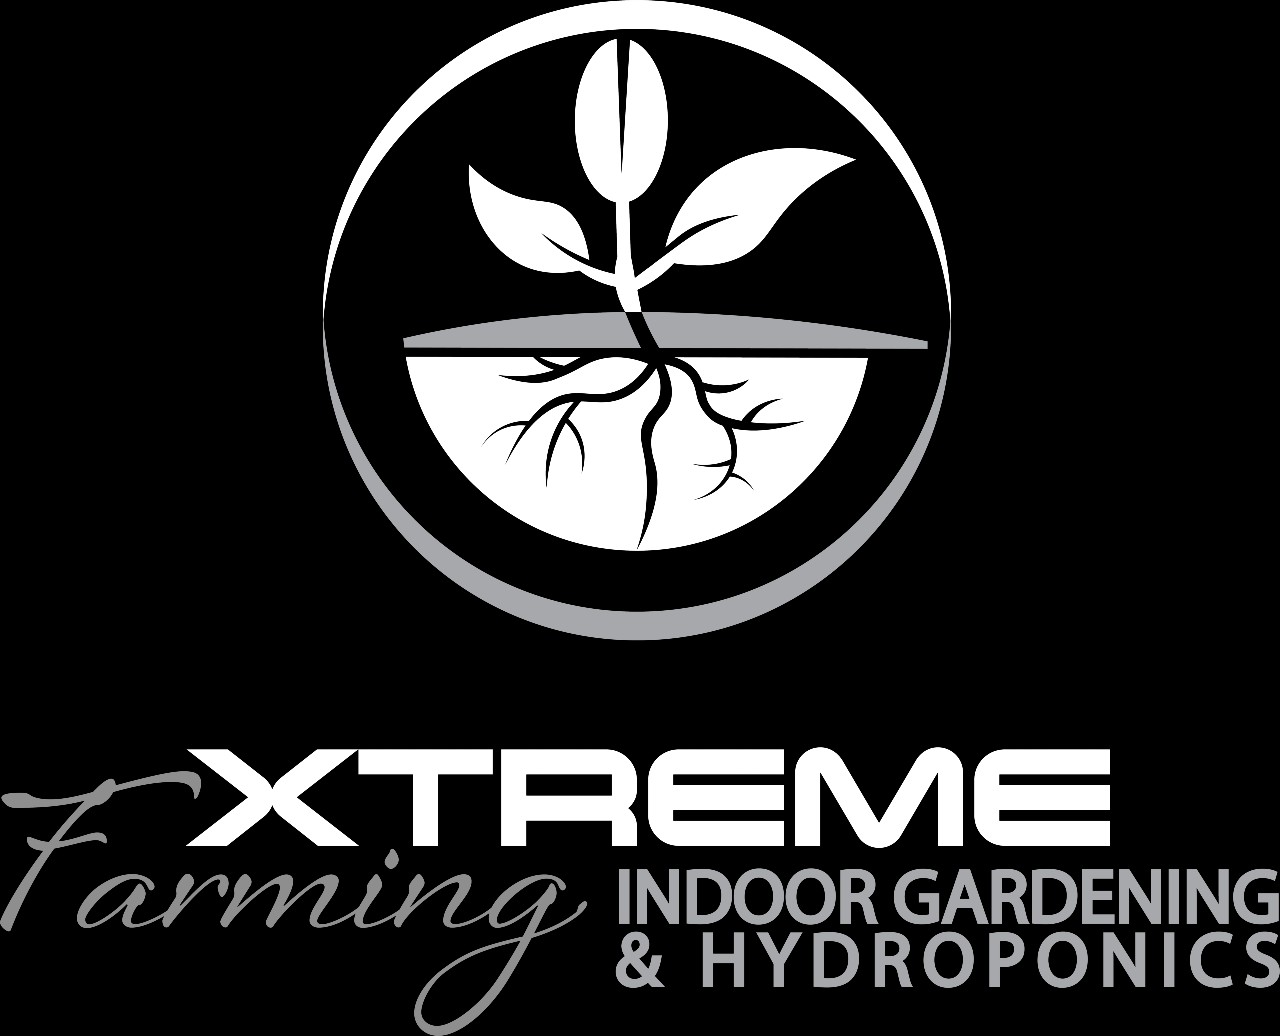 Xtreme Farming - Indoor Gardening & Hydroponics Supplies